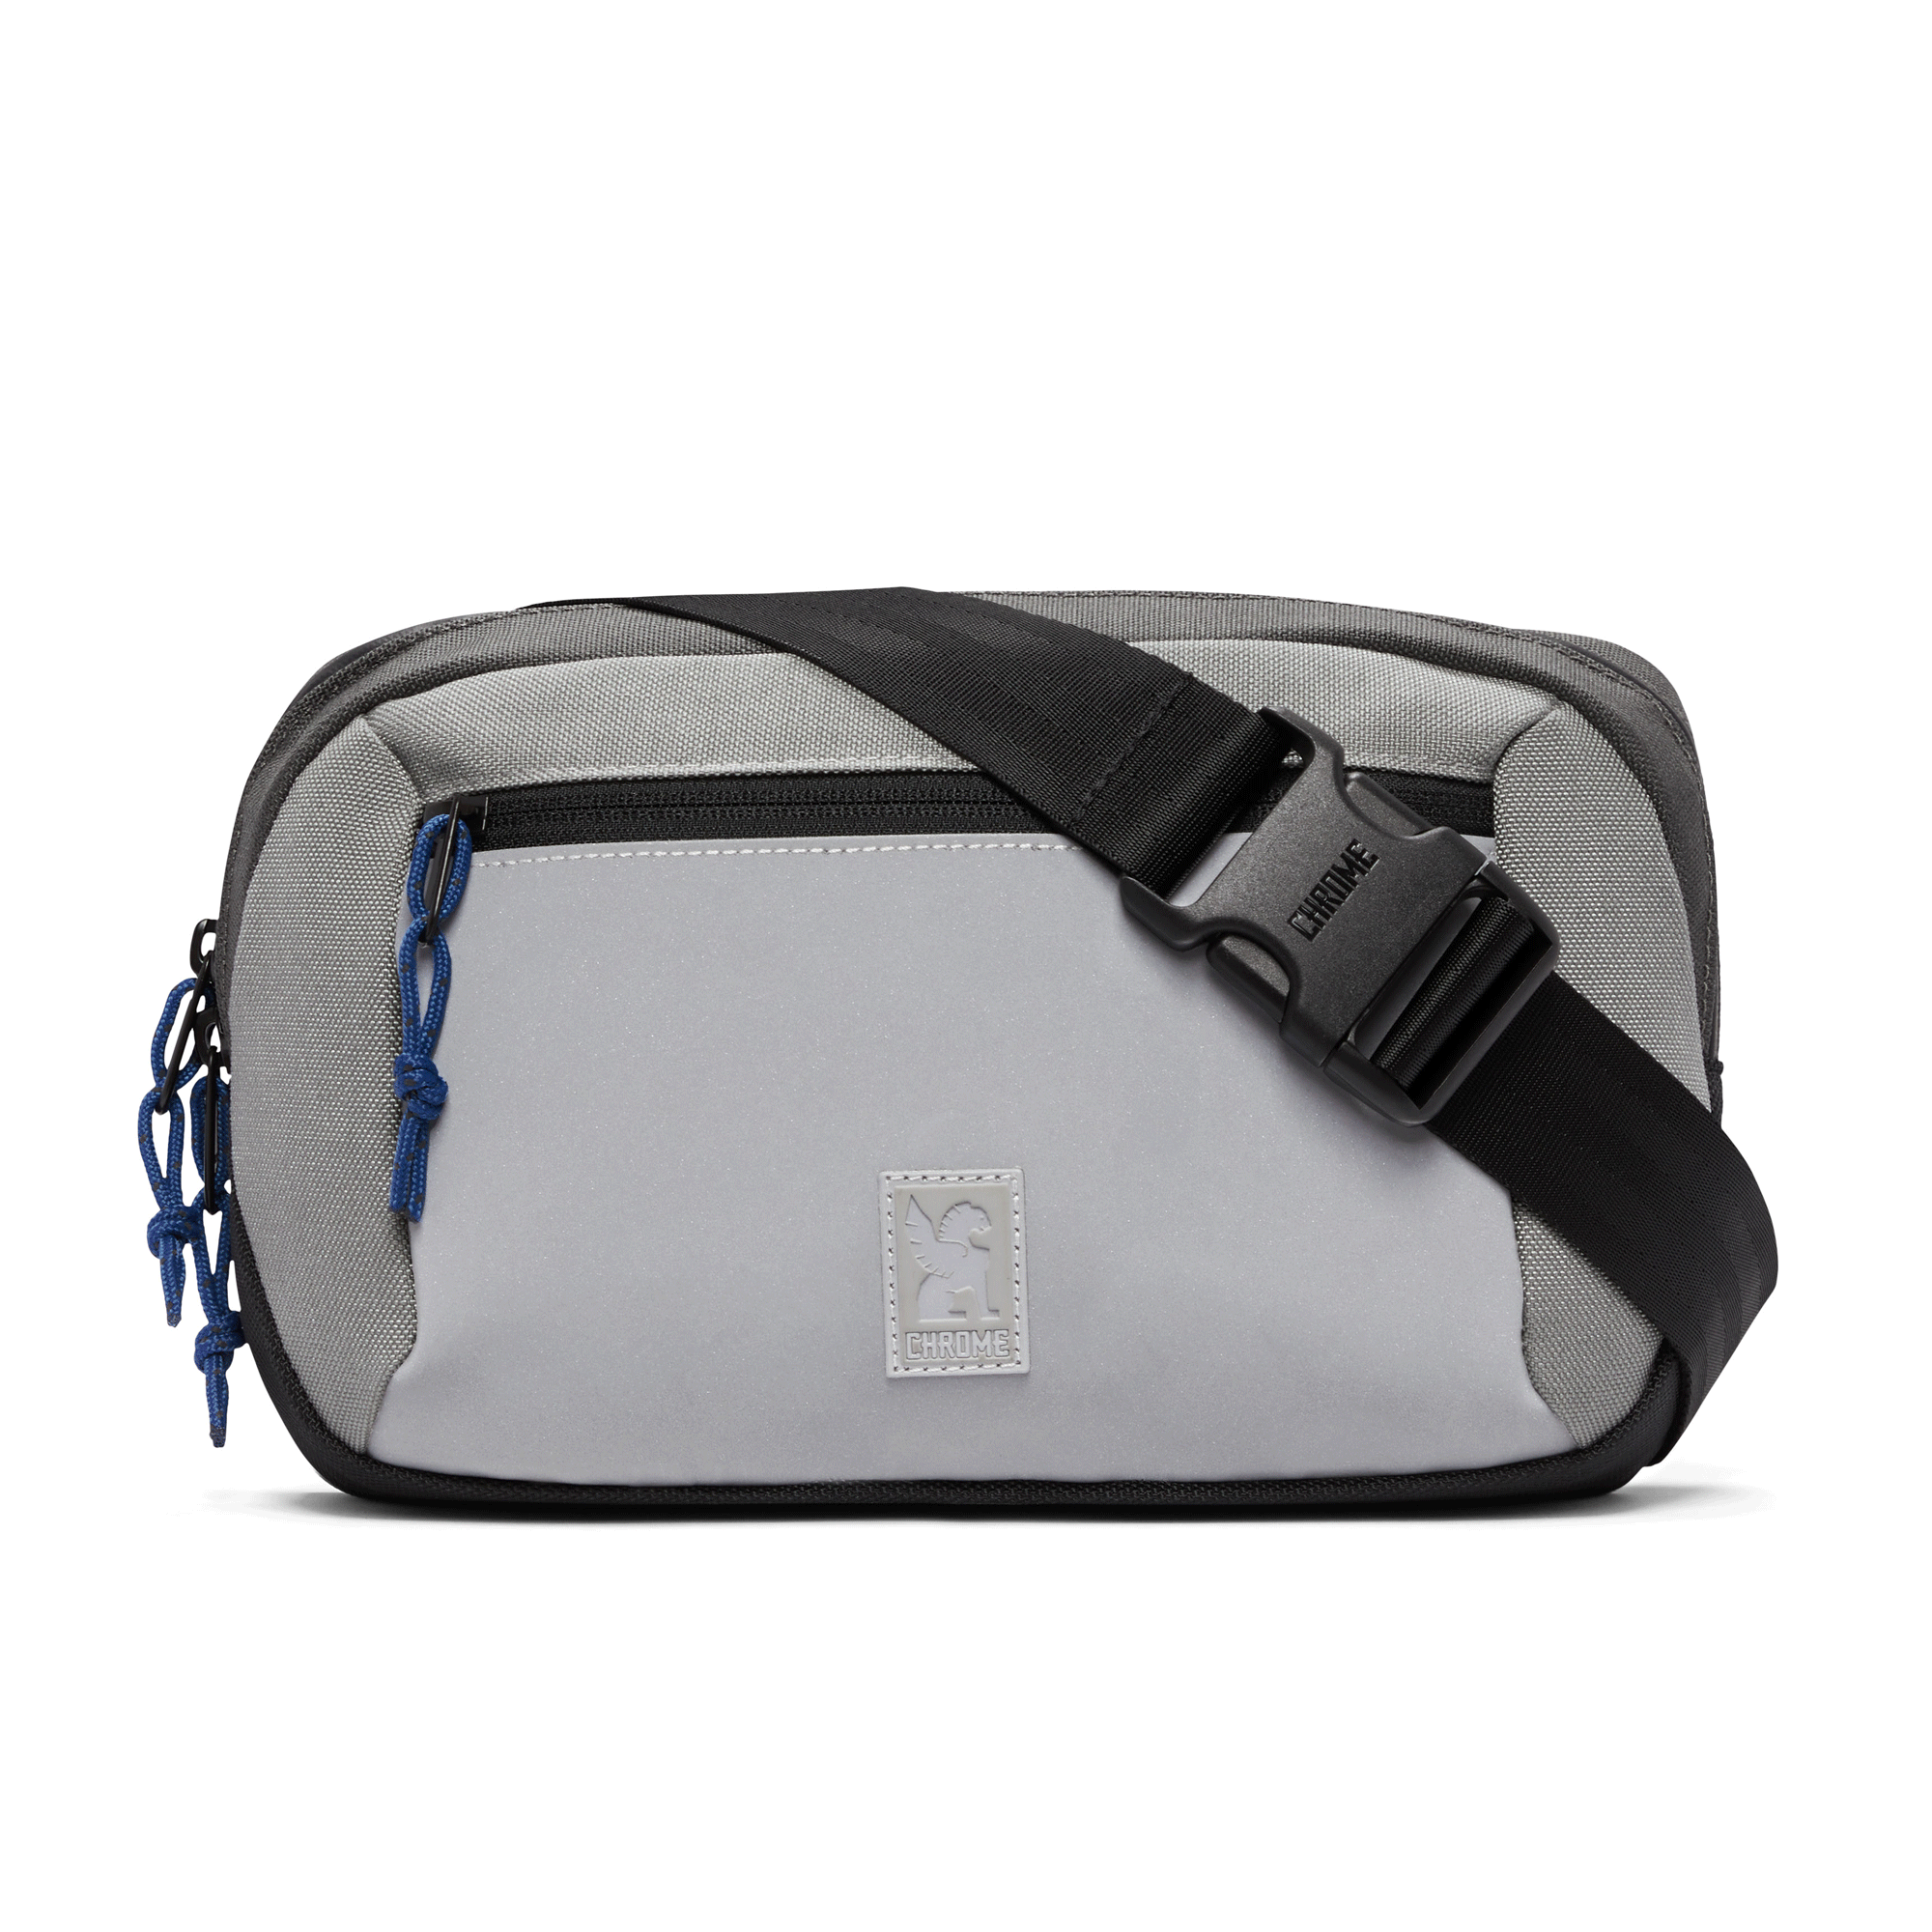 Ziptop Waistpack sling in reflective grey front reflective detail #color_fog